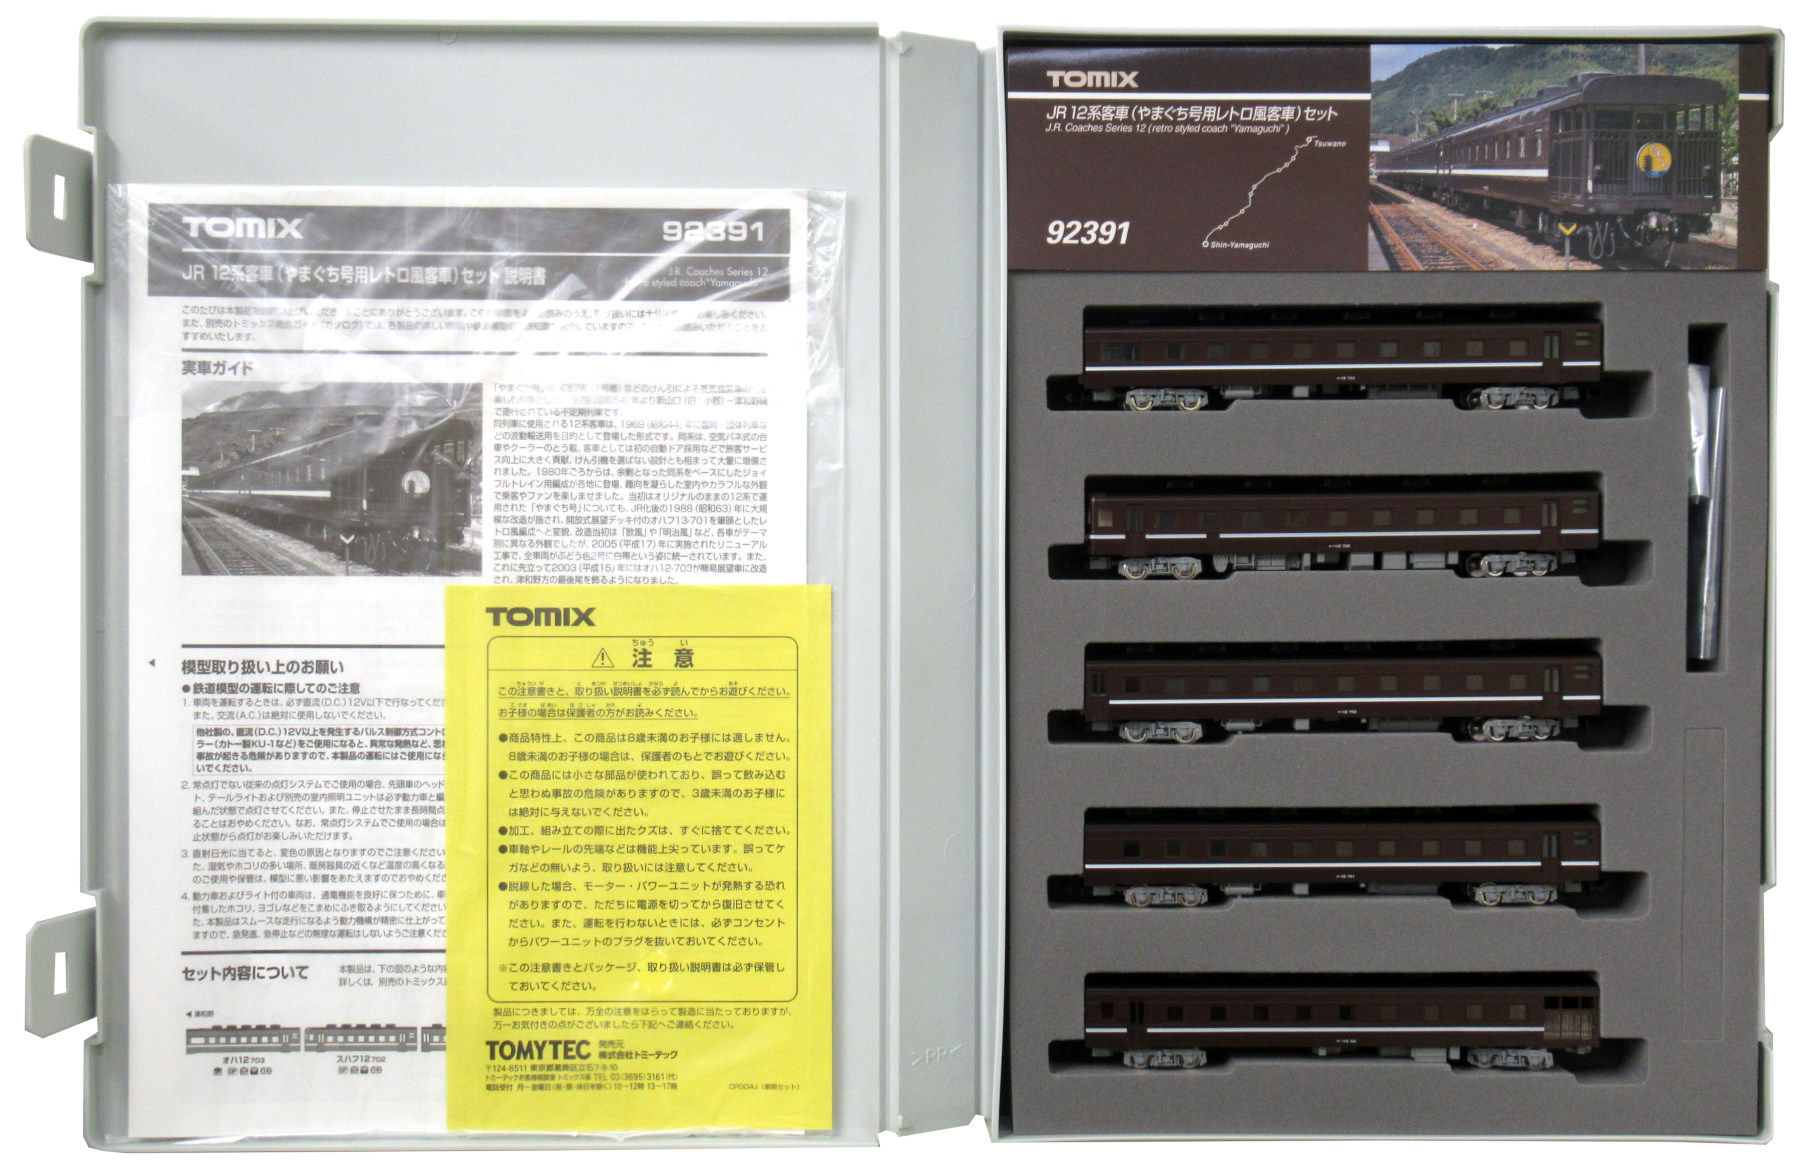 TOMIX 92391 JR 12系客車 やまぐち号レトロ風客車